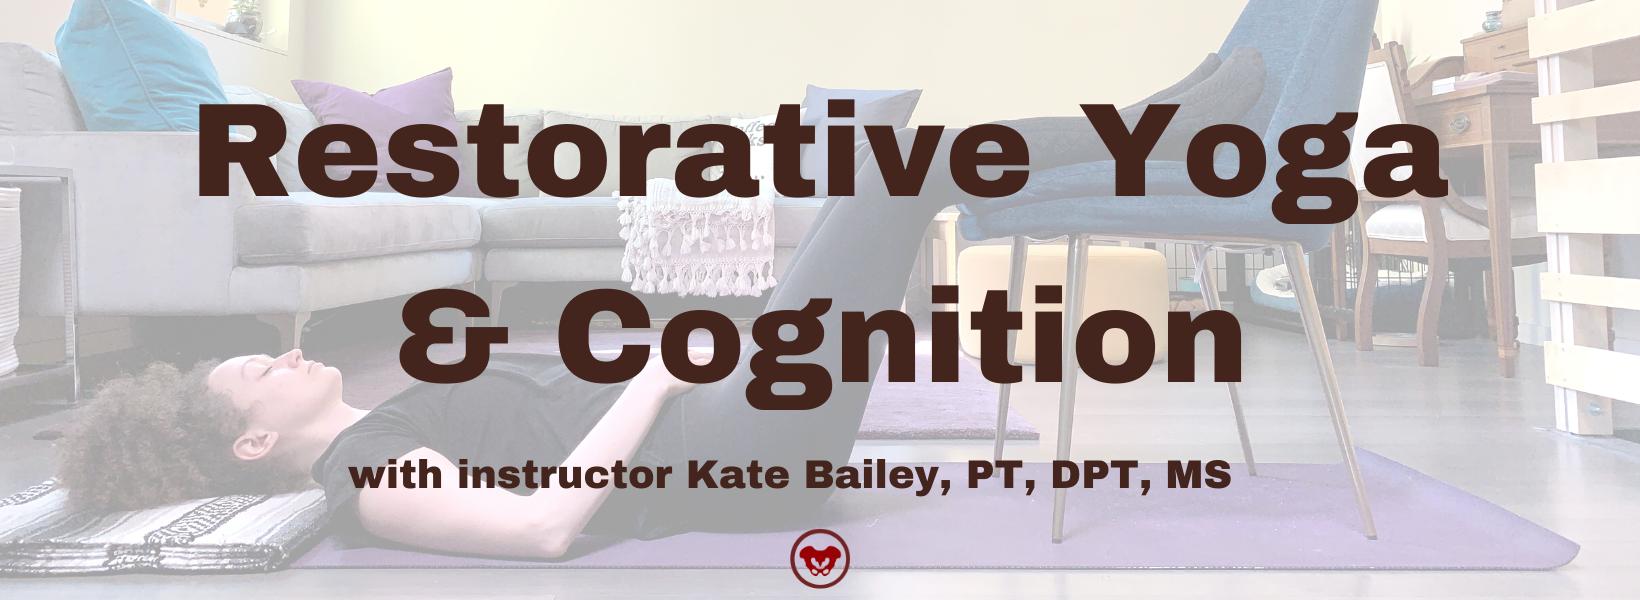 Restorative Yoga & Cognition